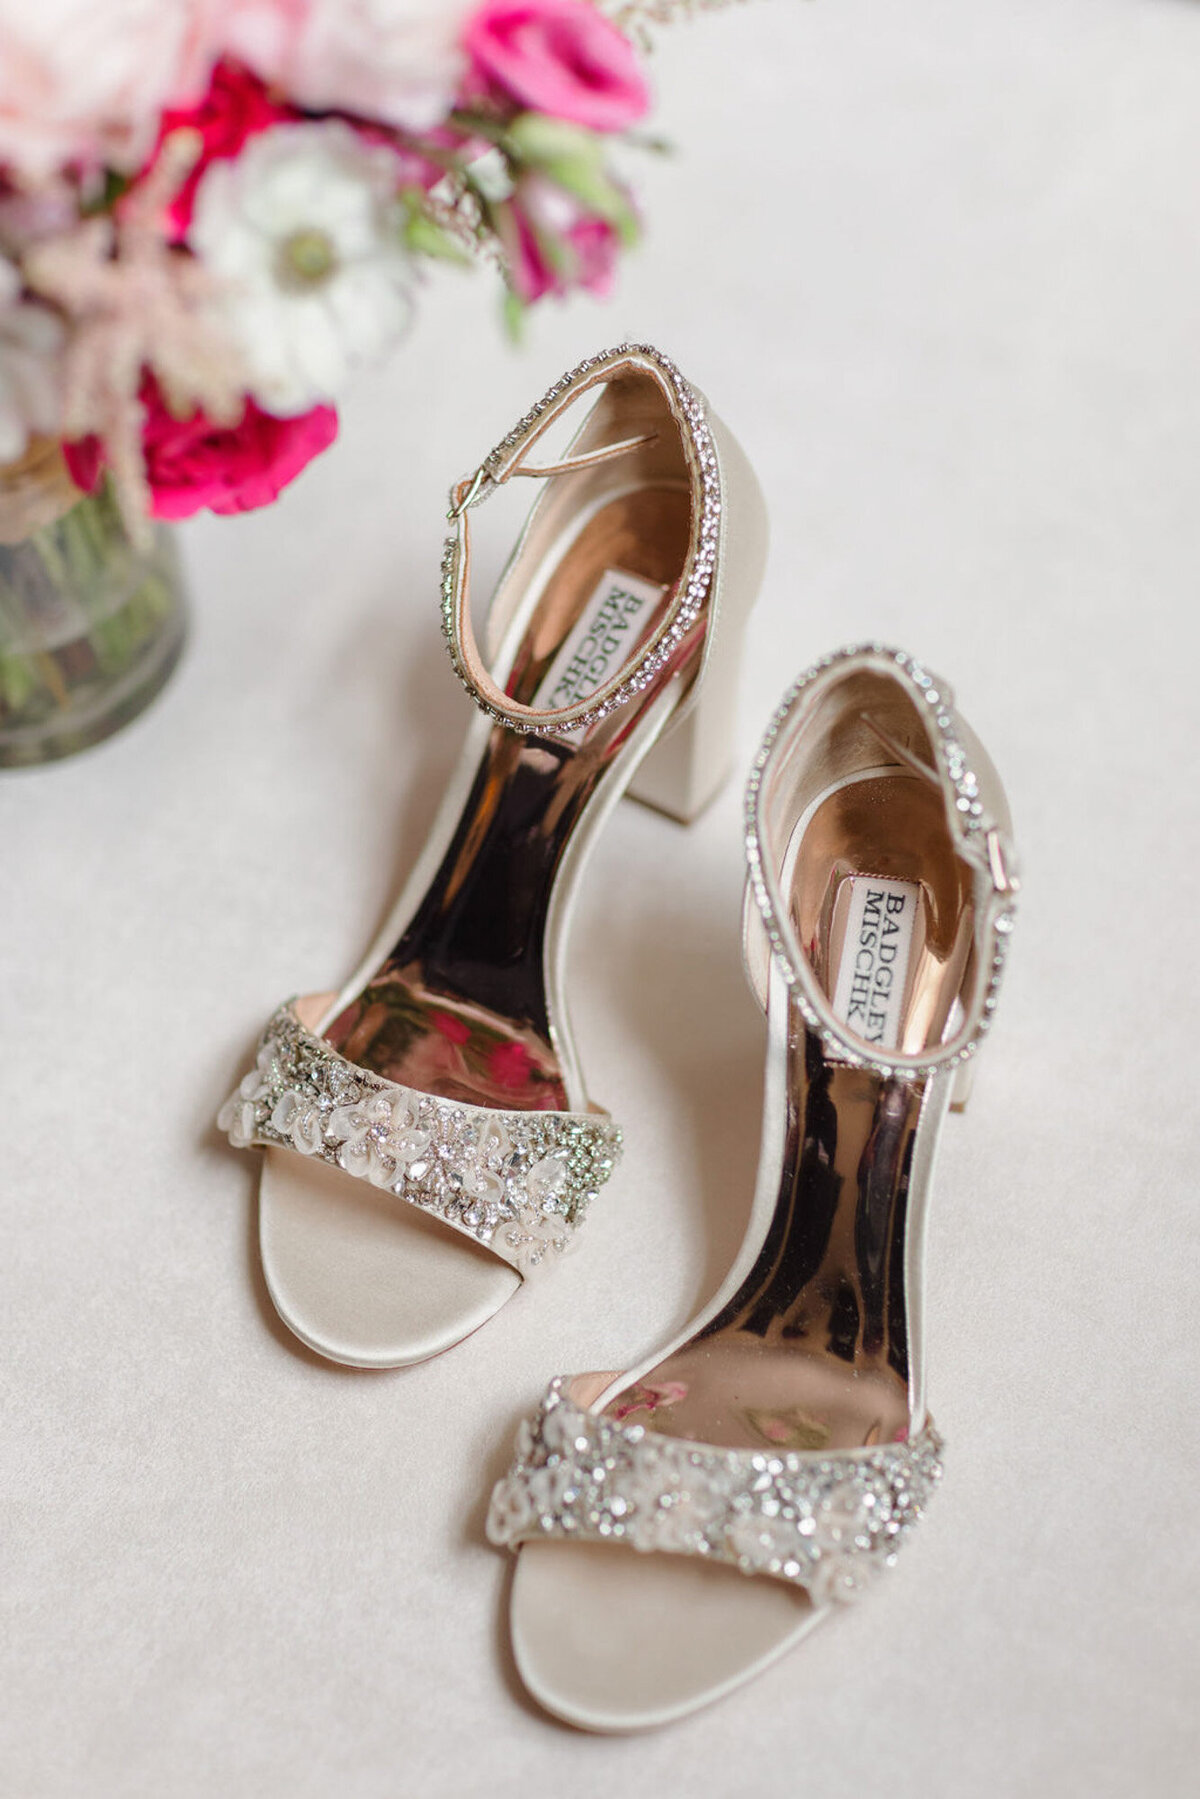 luxury wedding heels with gemstones